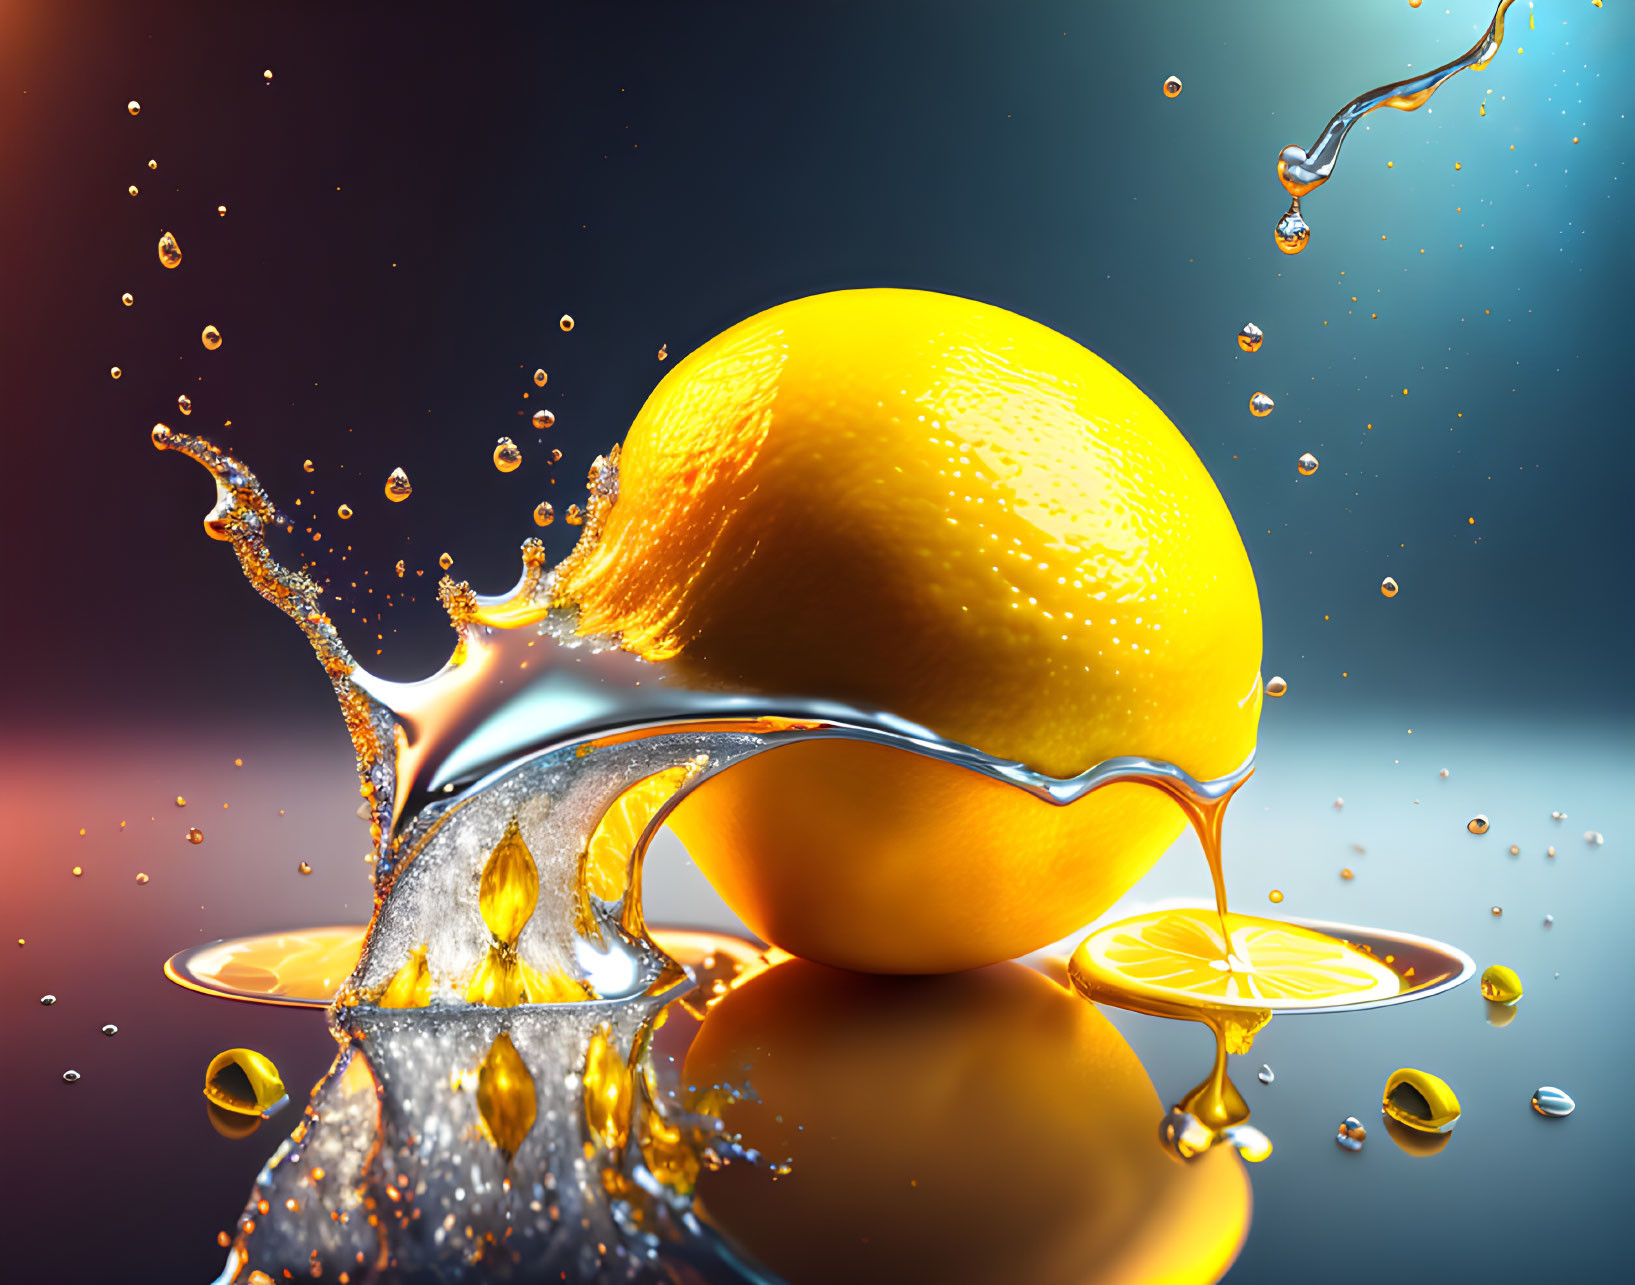 Bright Lemon with Splashing Water on Glossy Surface